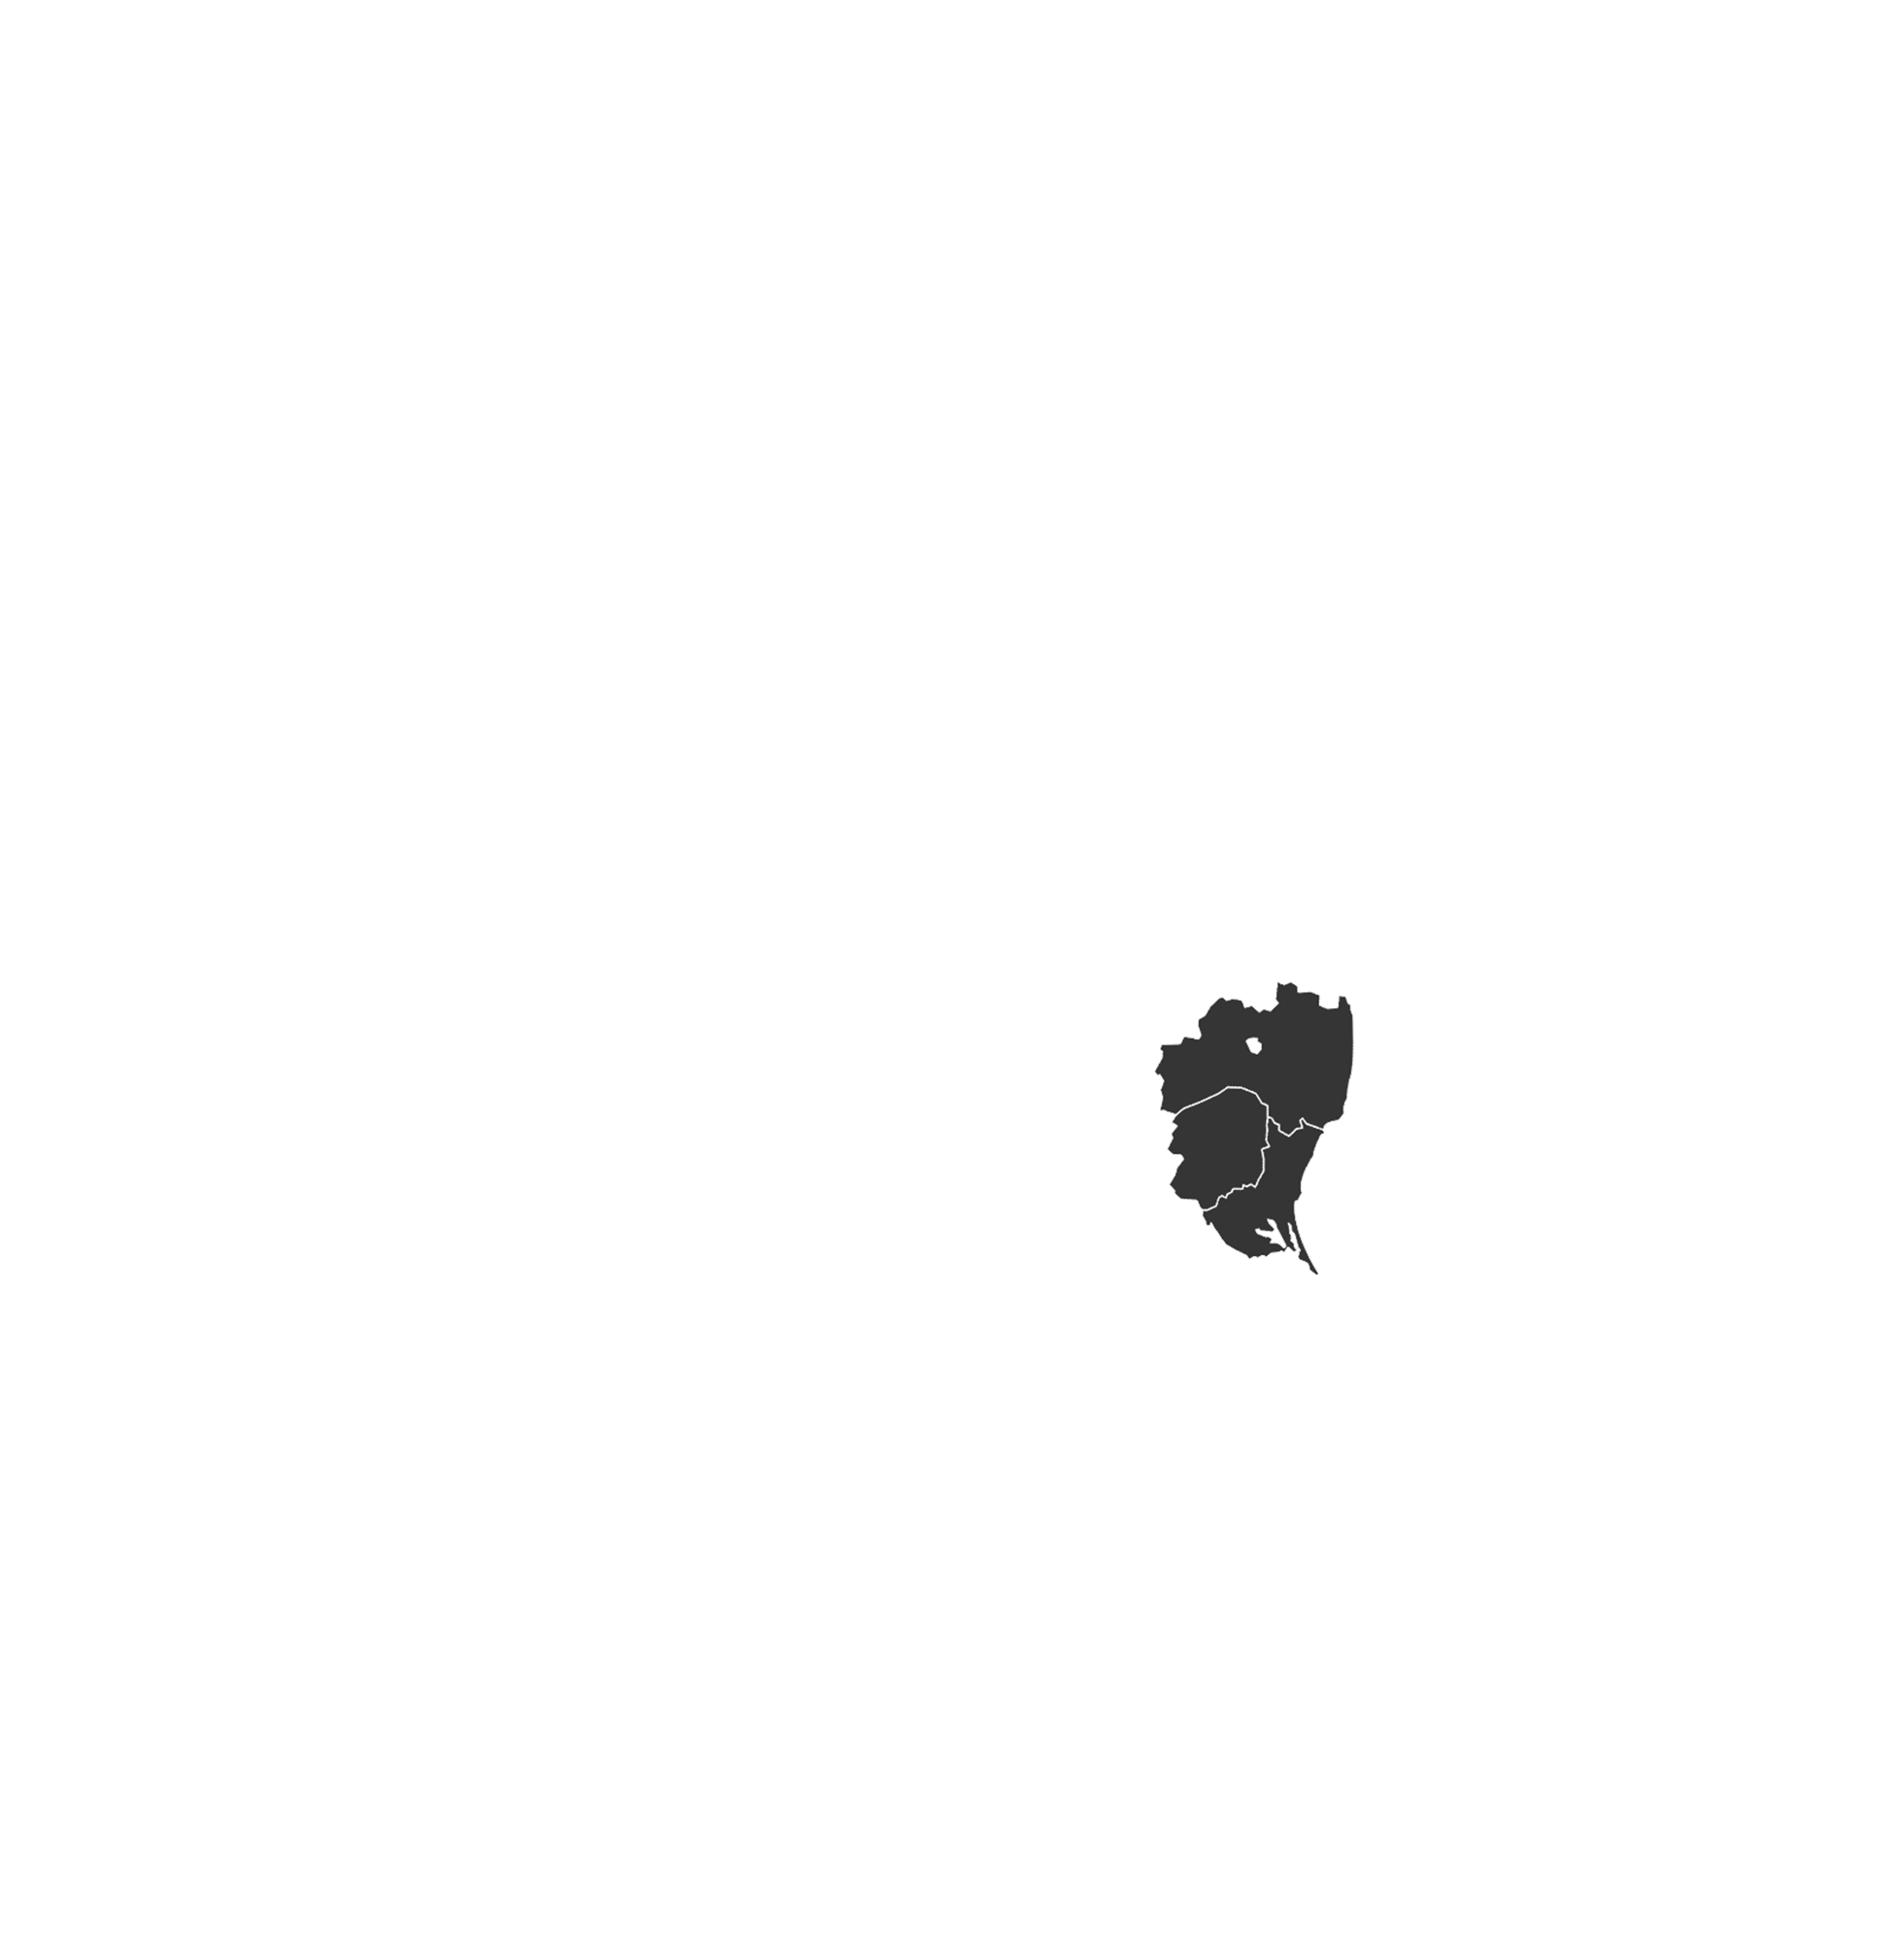 MAP image